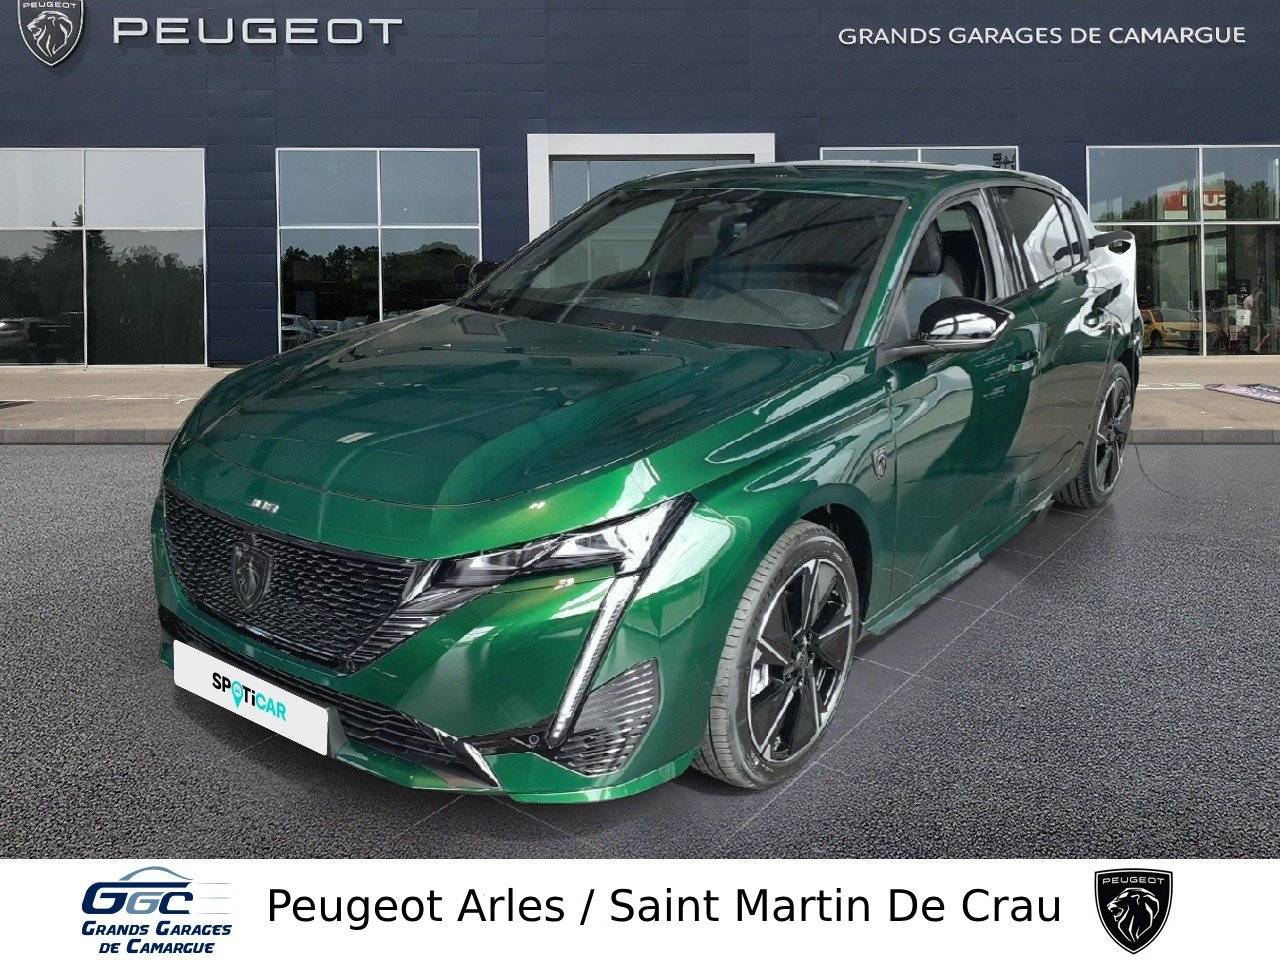 PEUGEOT 308 | 308 Electrique 54 kWh 156ch occasion - Peugeot Arles